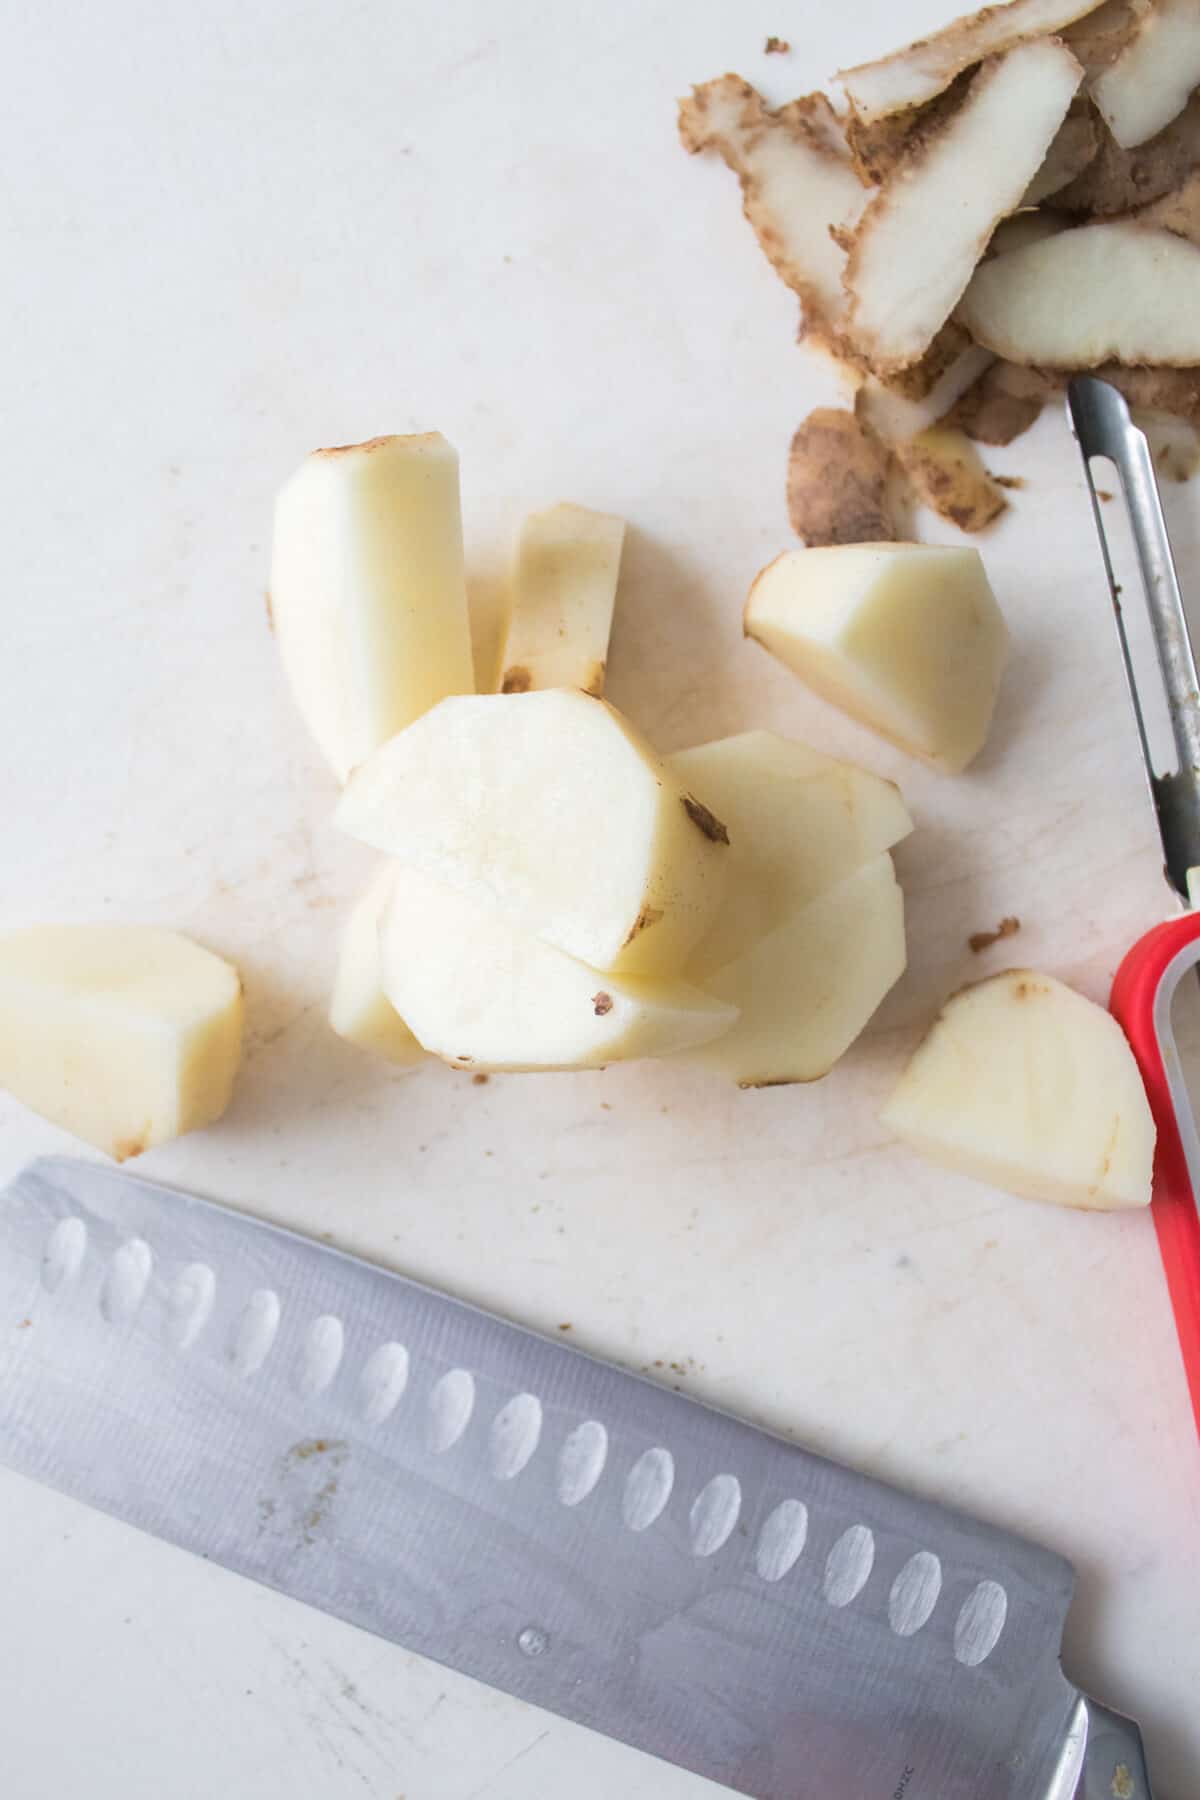 Cutting potatoes into chunks